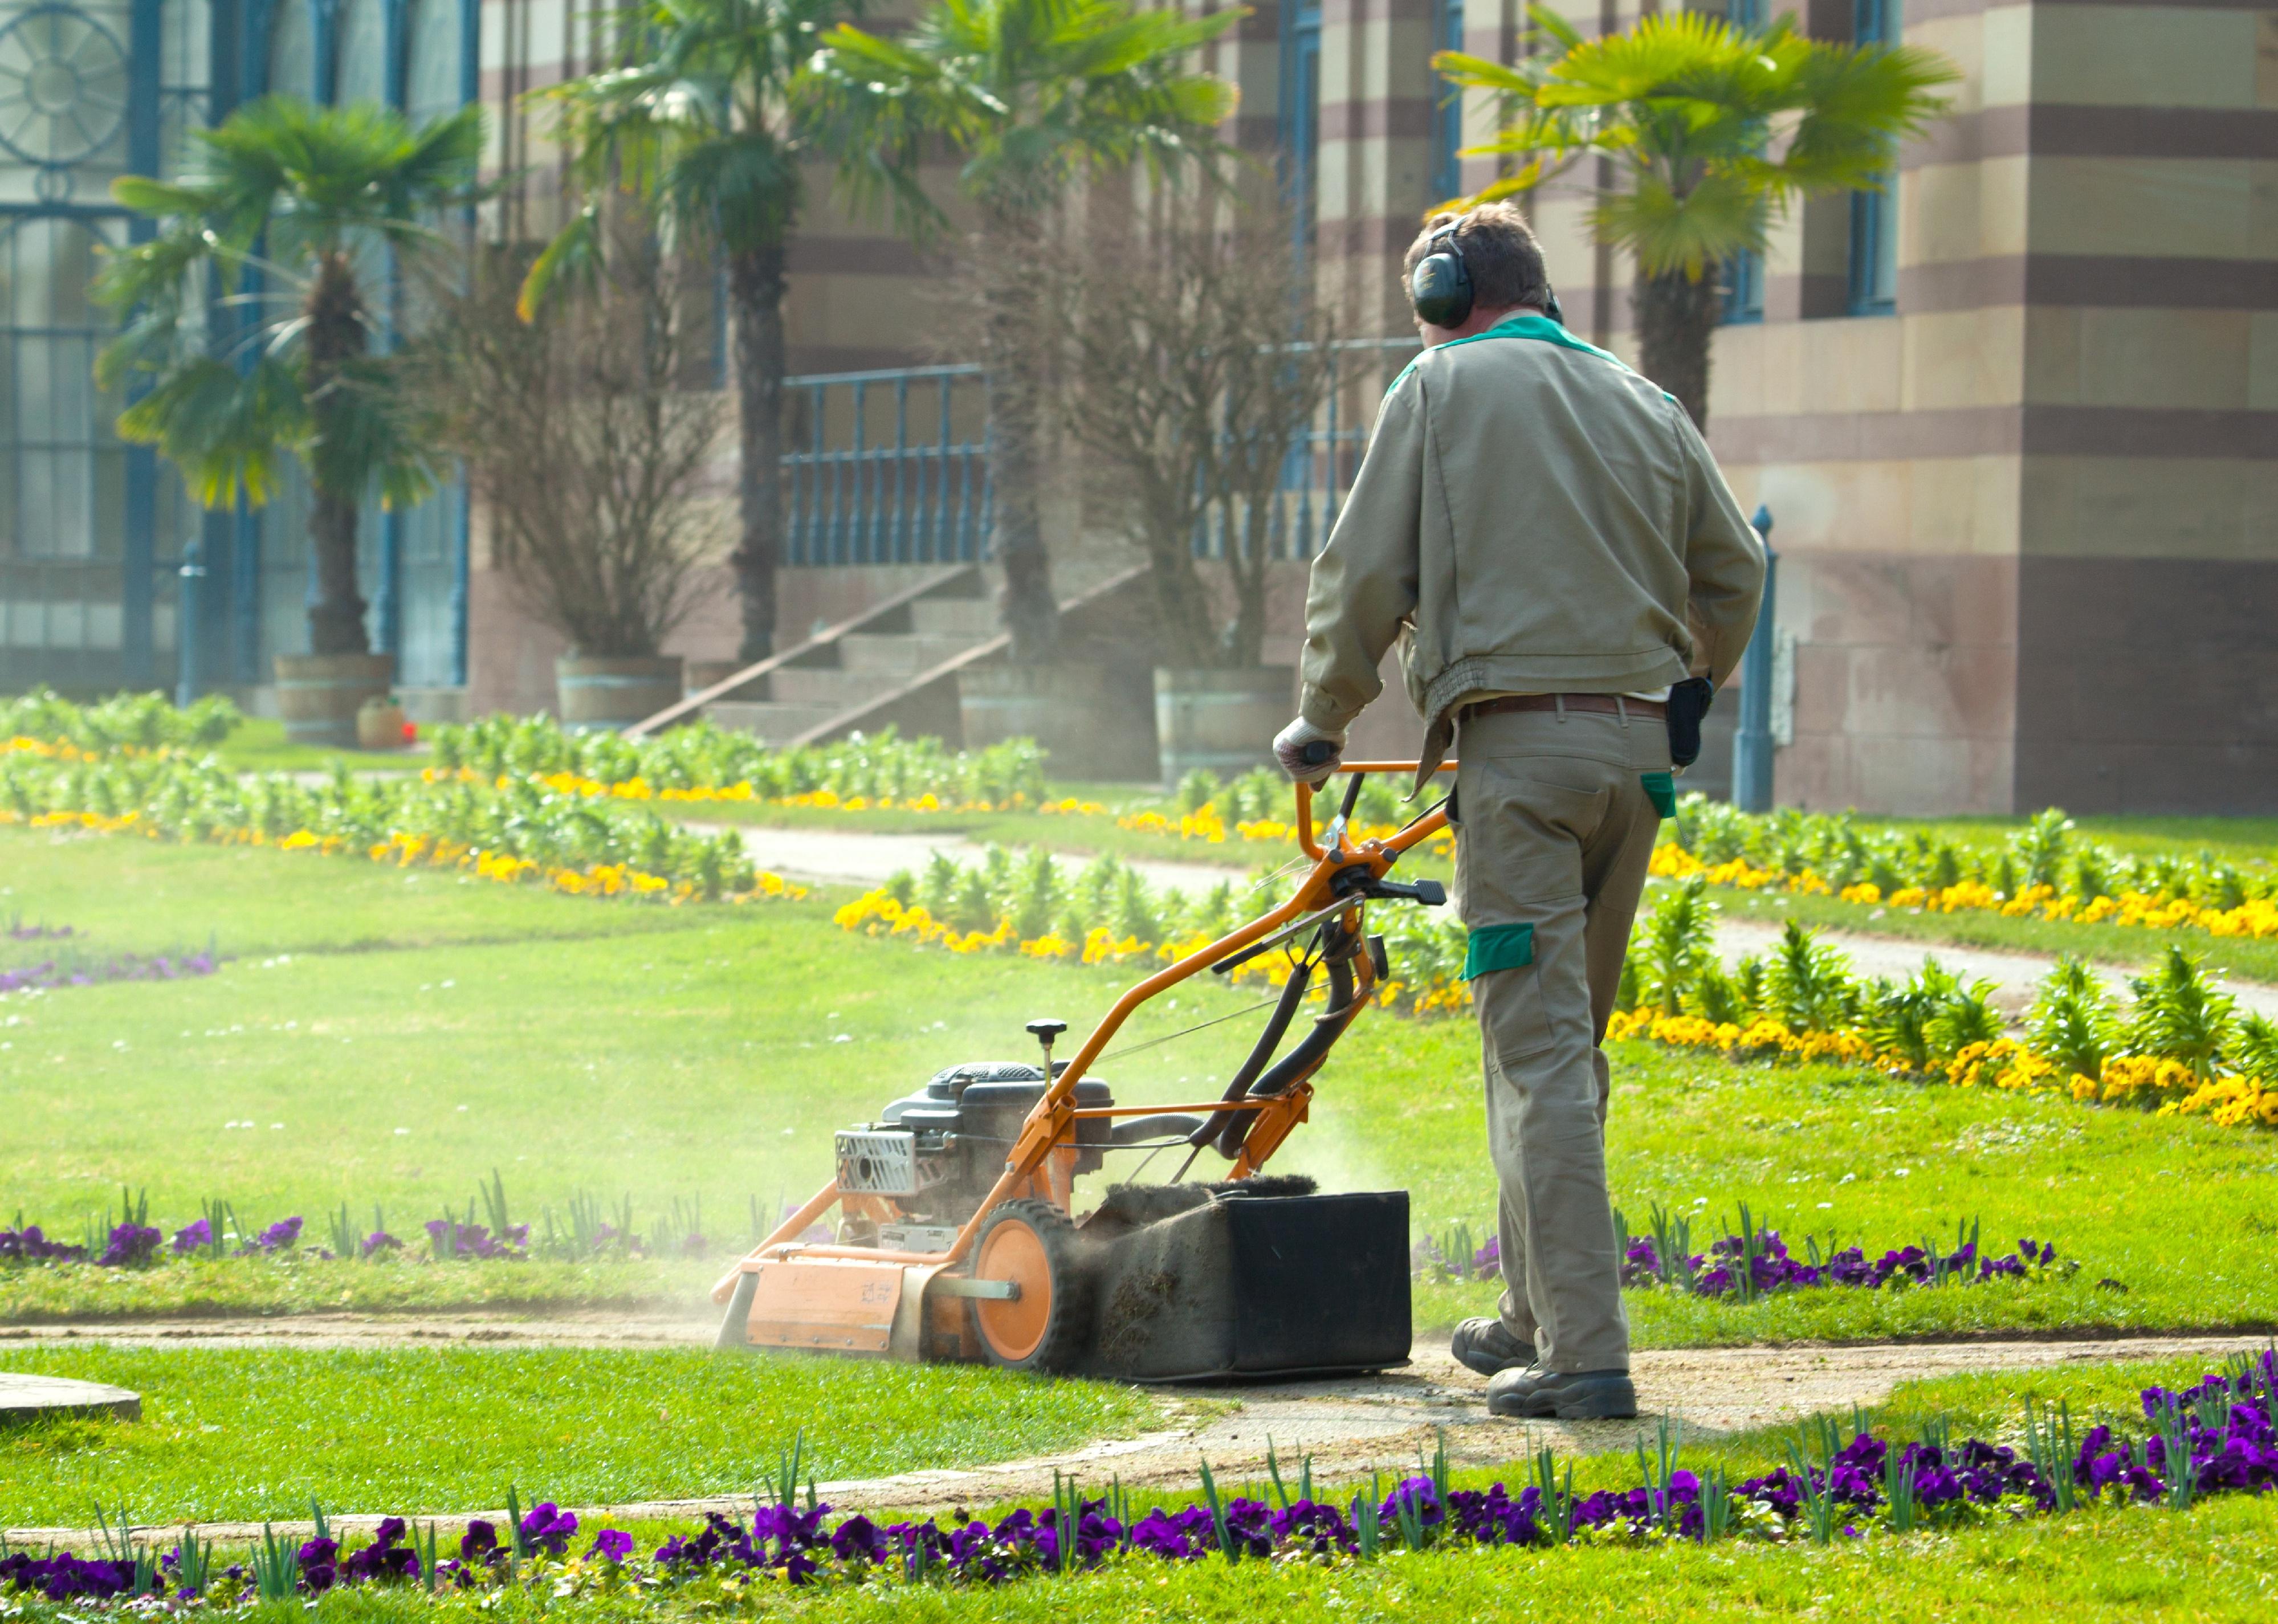 Grounds maintenance worker mows a lawn